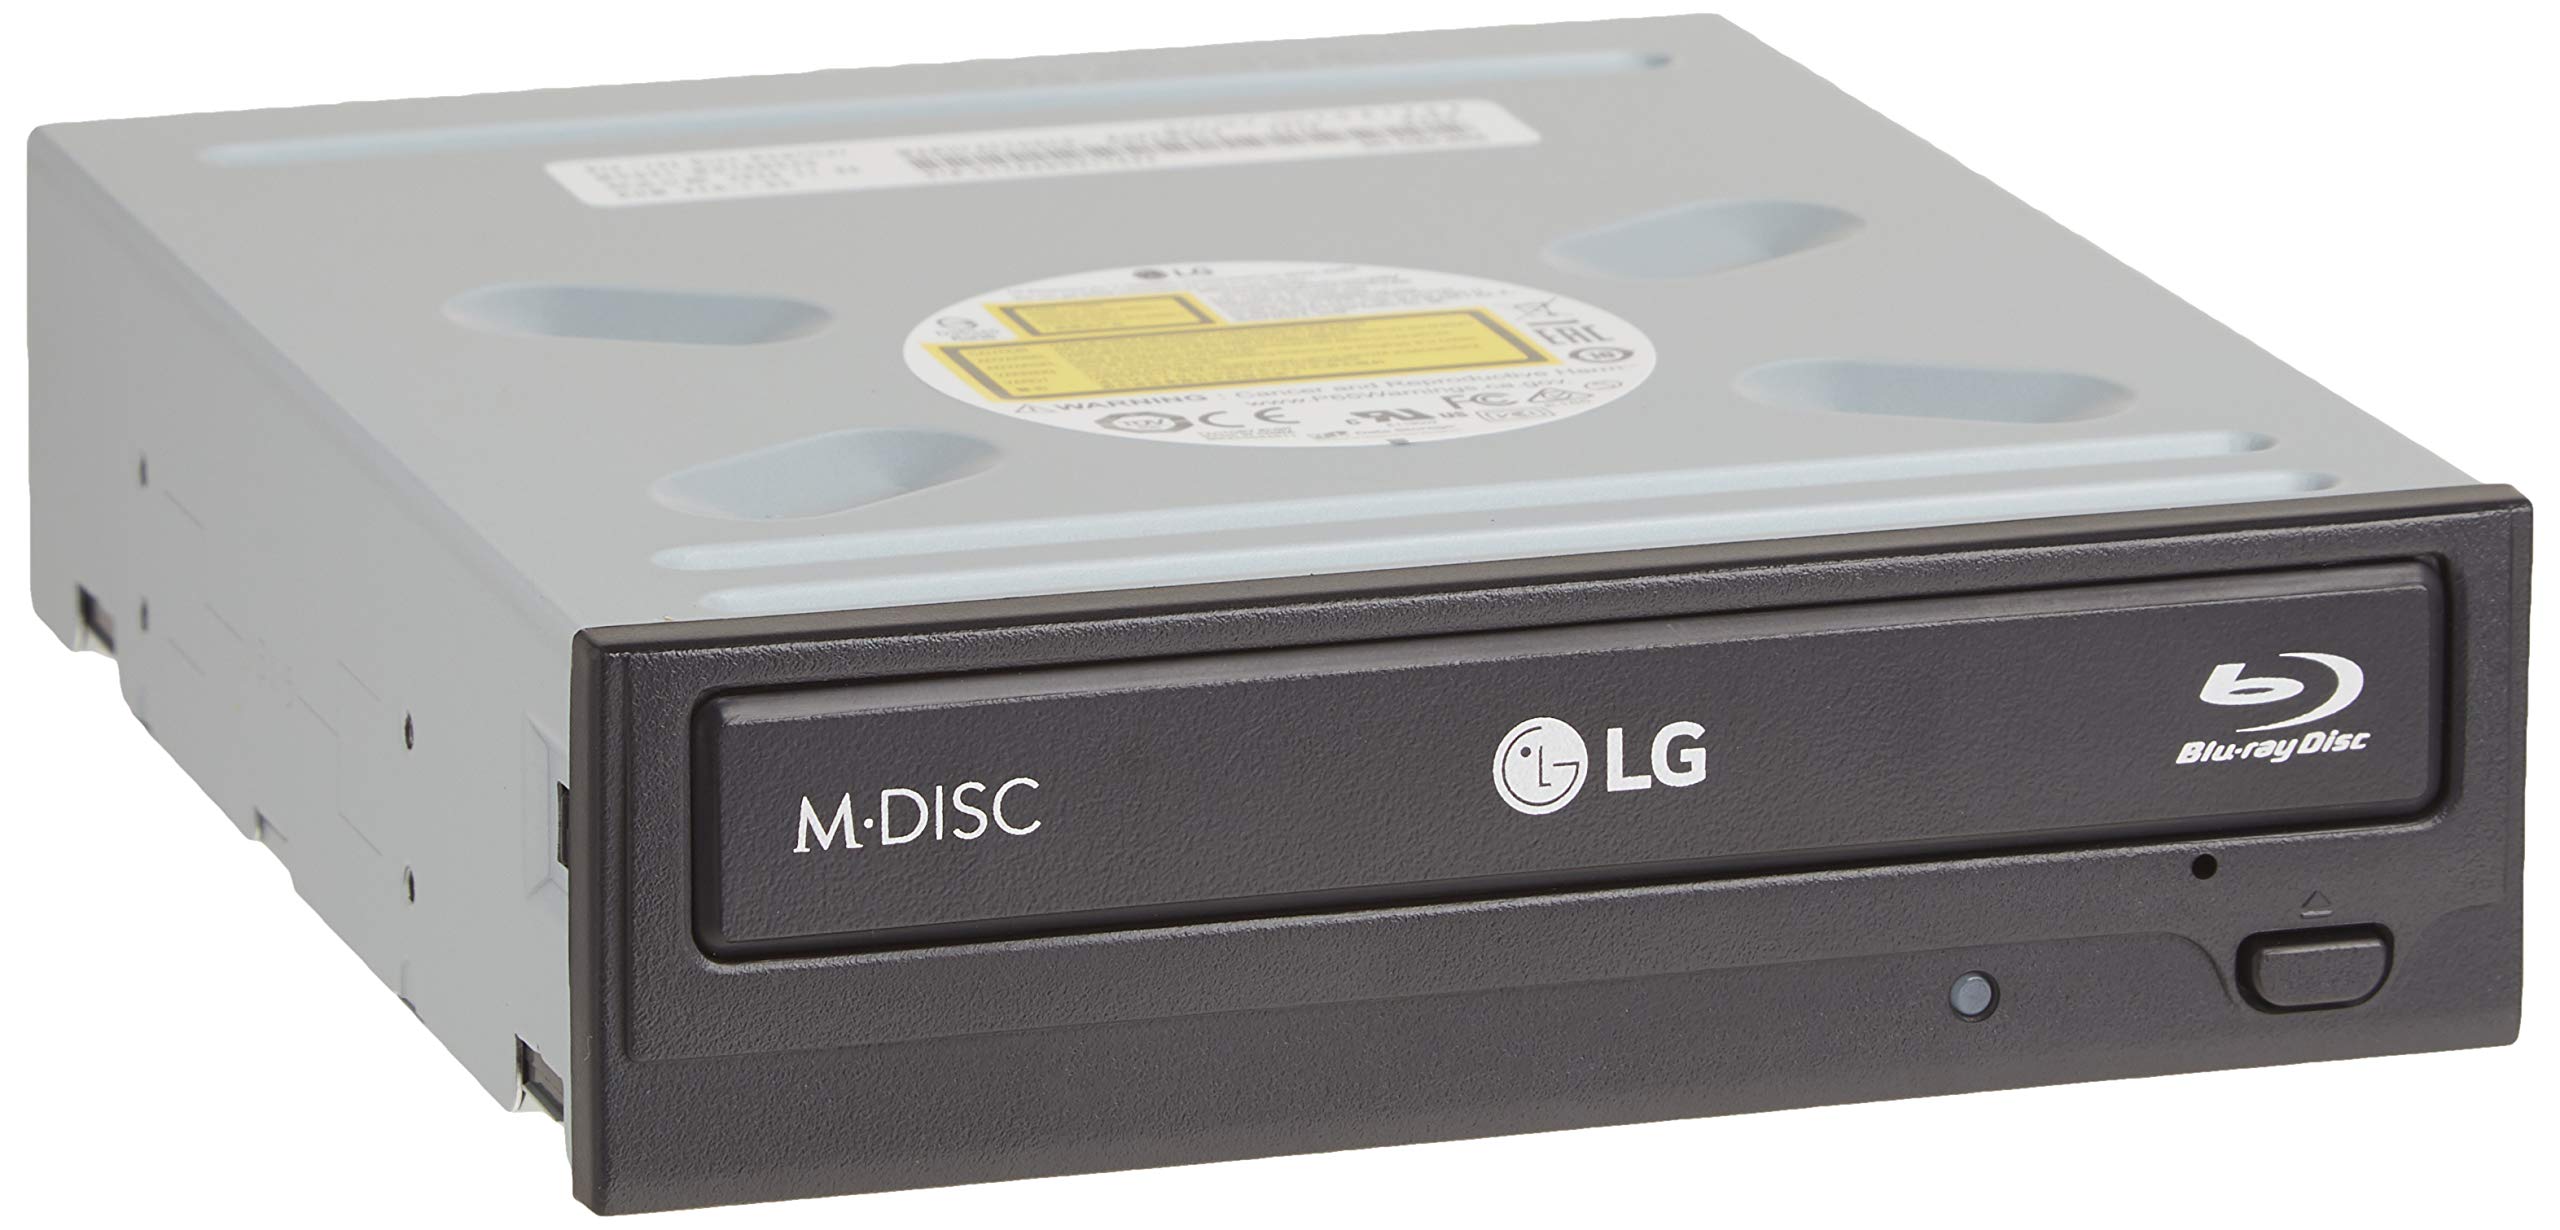 LG 16X Blu-ray/DVD/CD Multi compatible Internal SATA Rewriter Drive $60 + Free Shipping